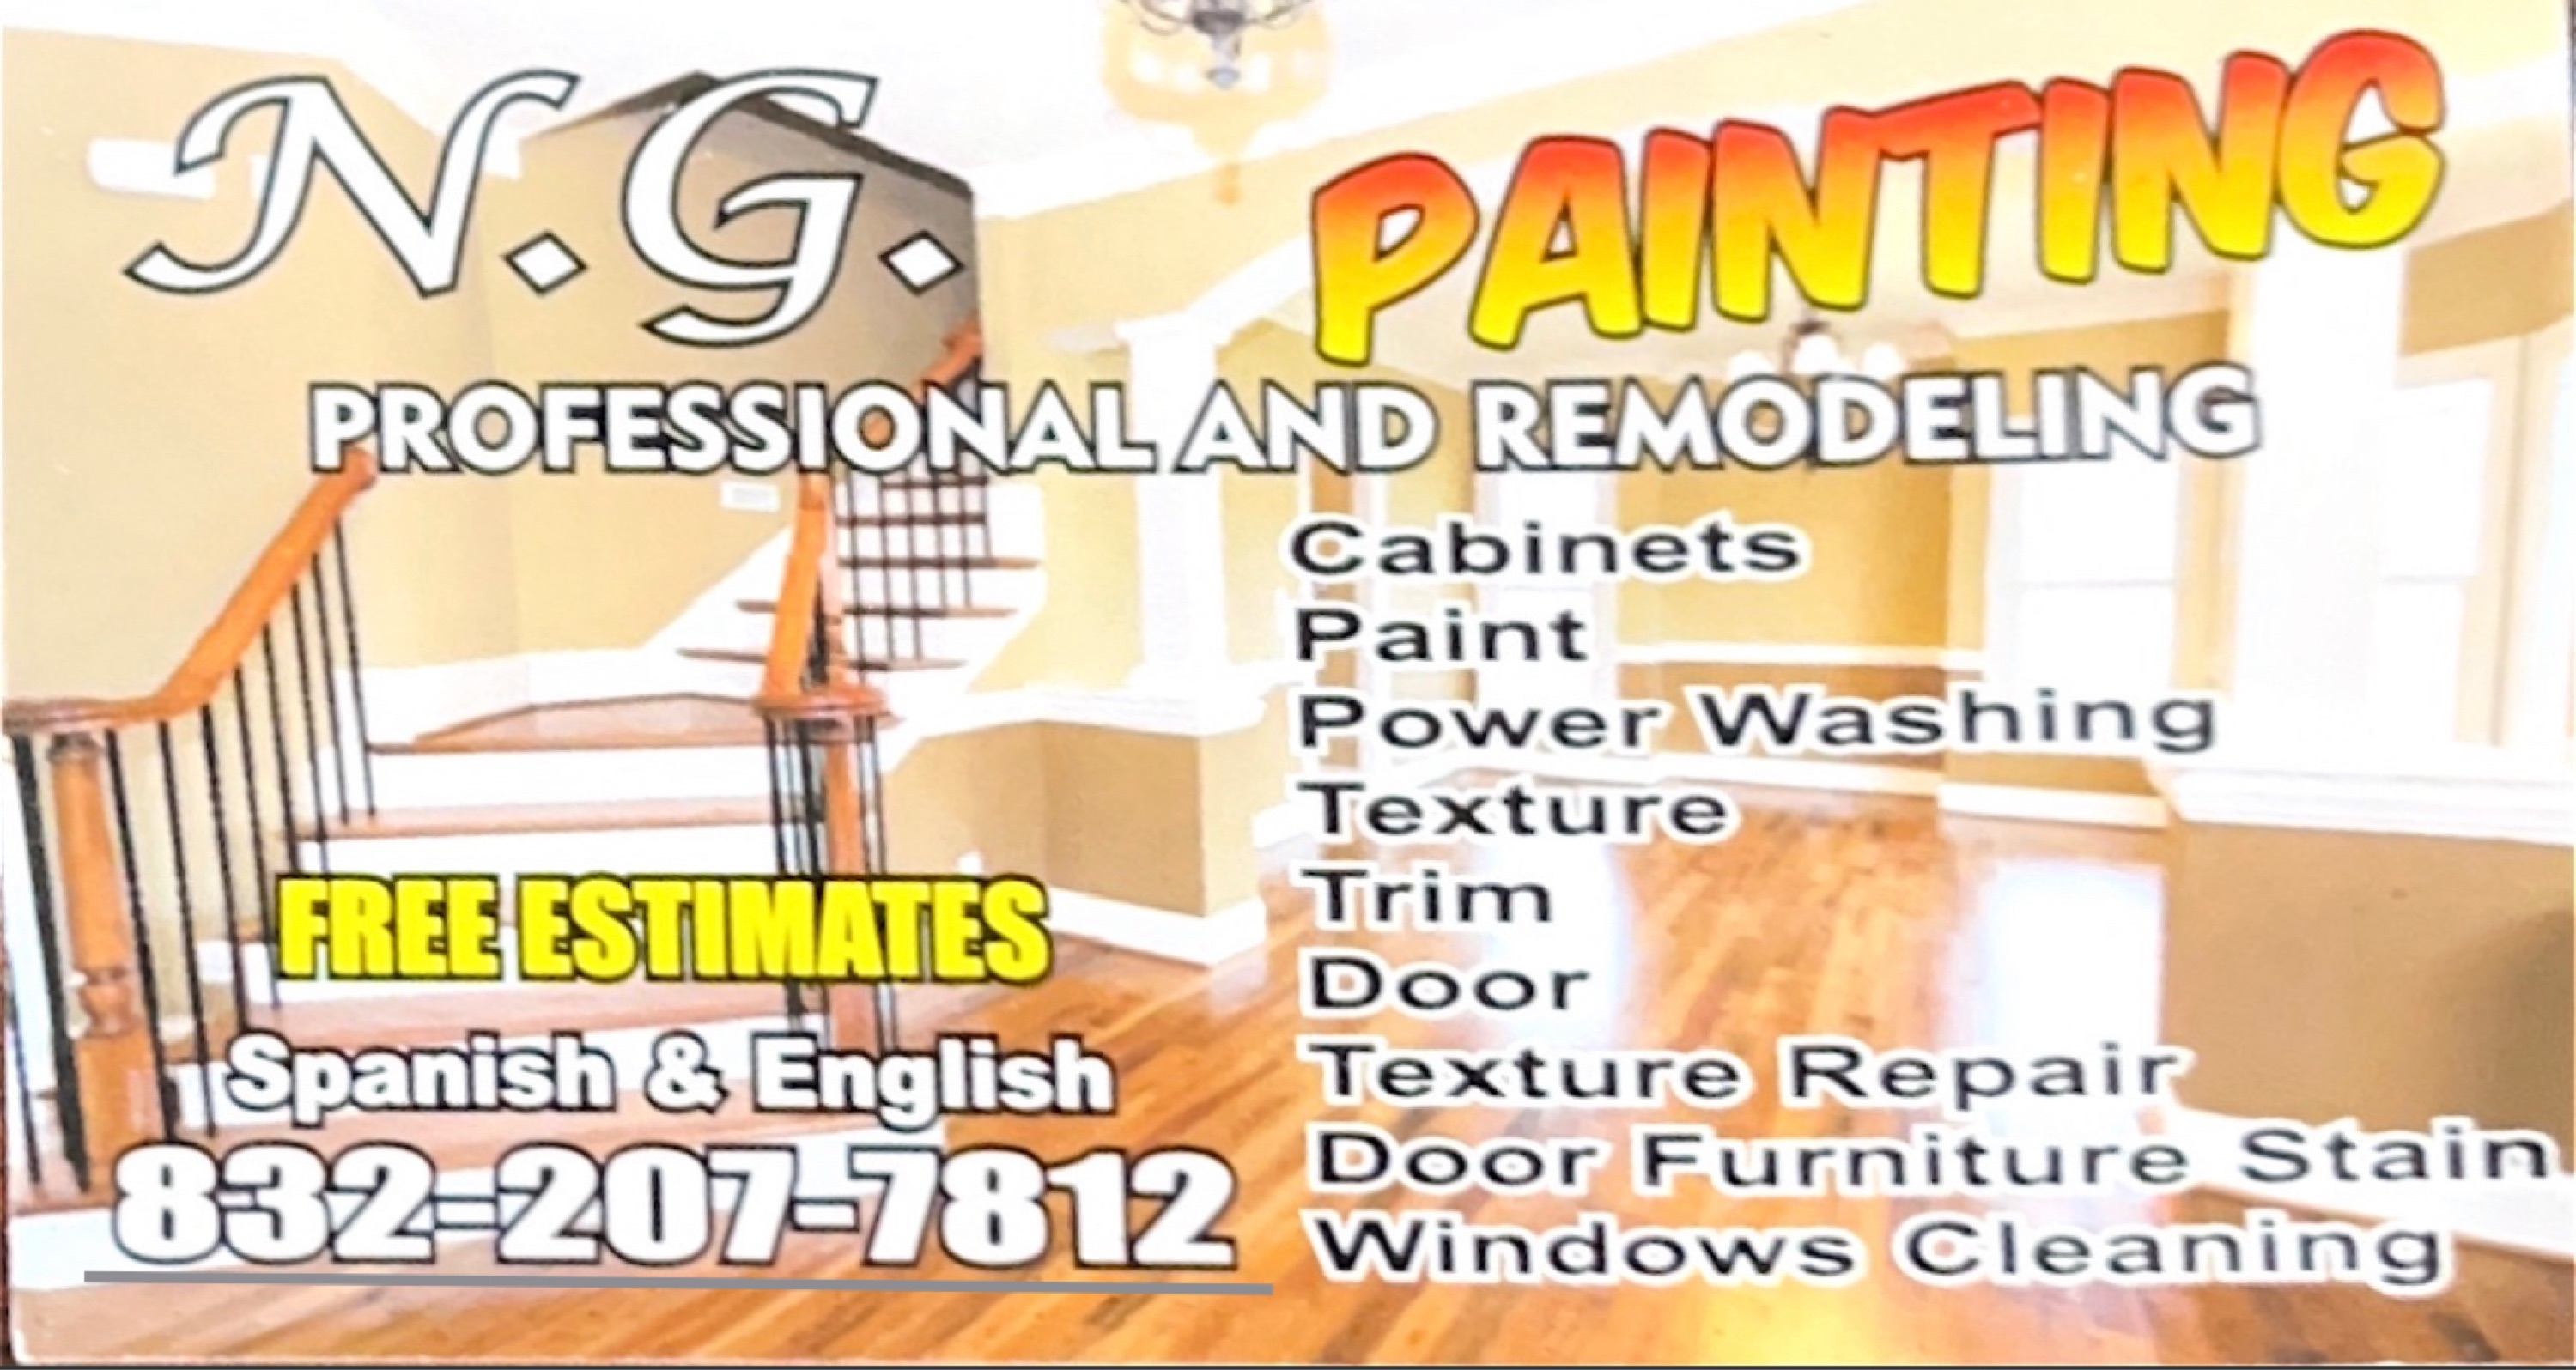 NG Painting Professional and Remodeling Logo